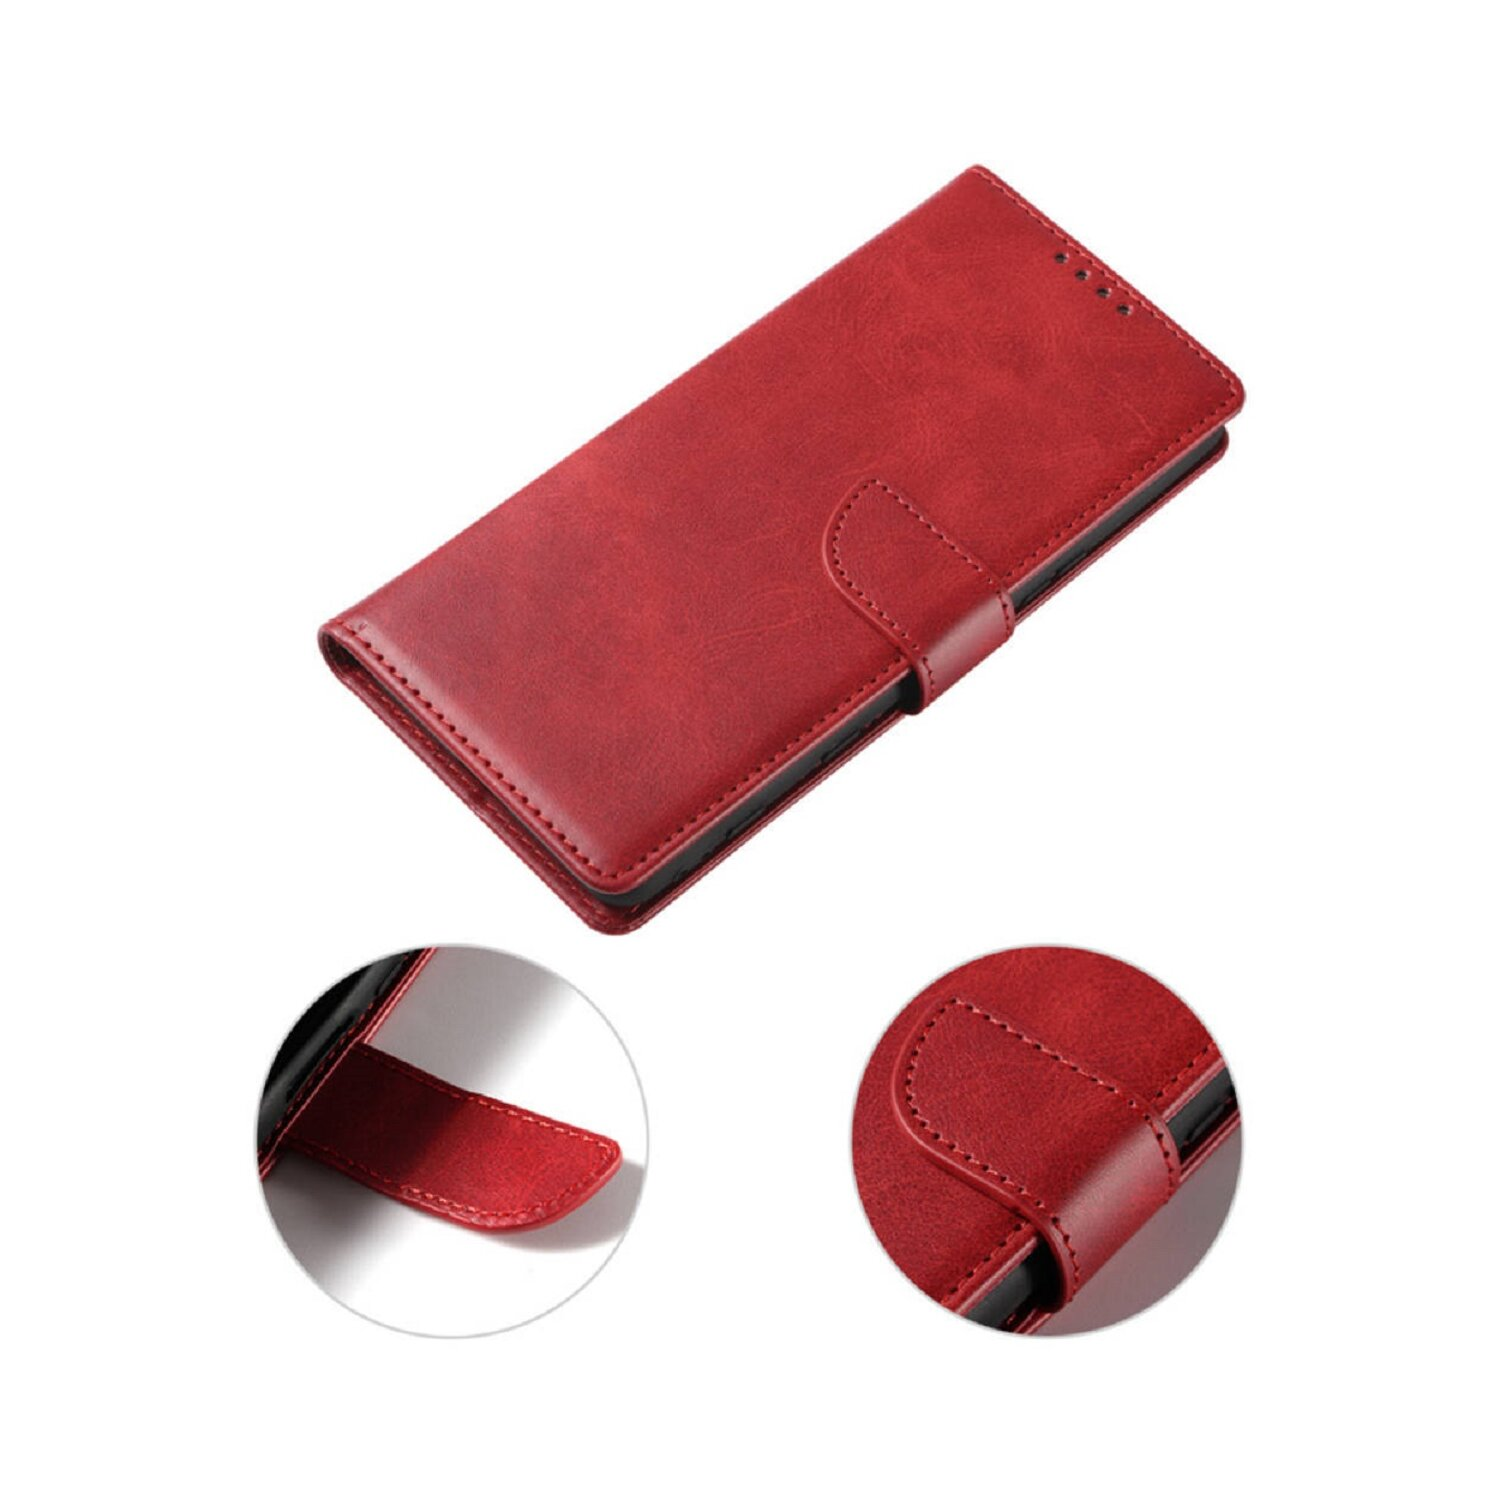 A78, COFI Wallet Magnet Oppo, Tasche, Bookcover, Buch Rot Case